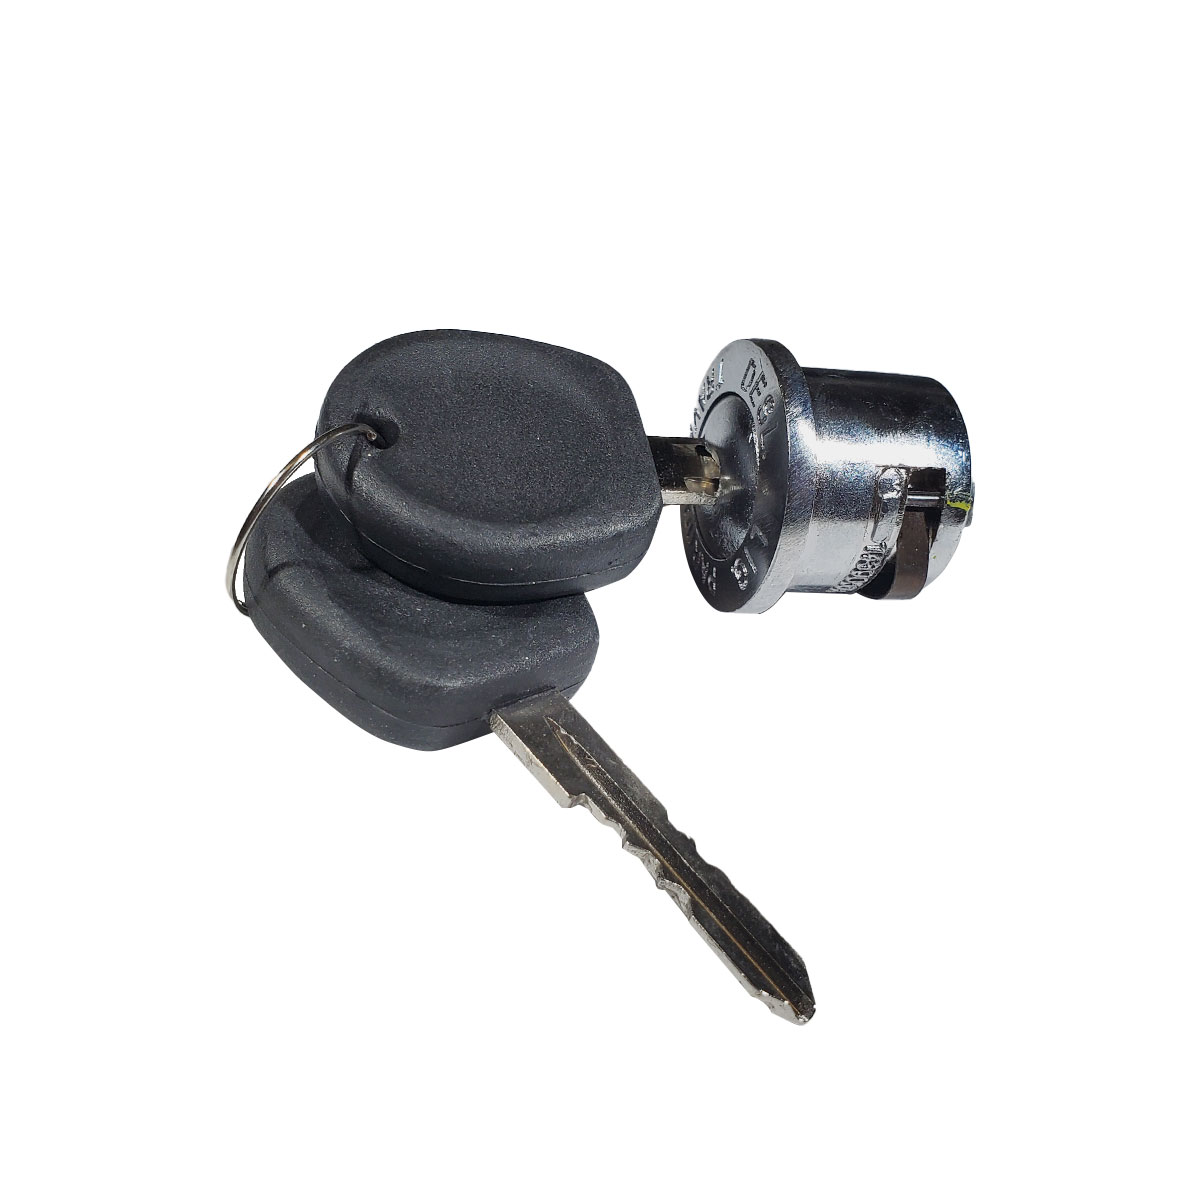 VW Ignition Lock Cylinder with Keys